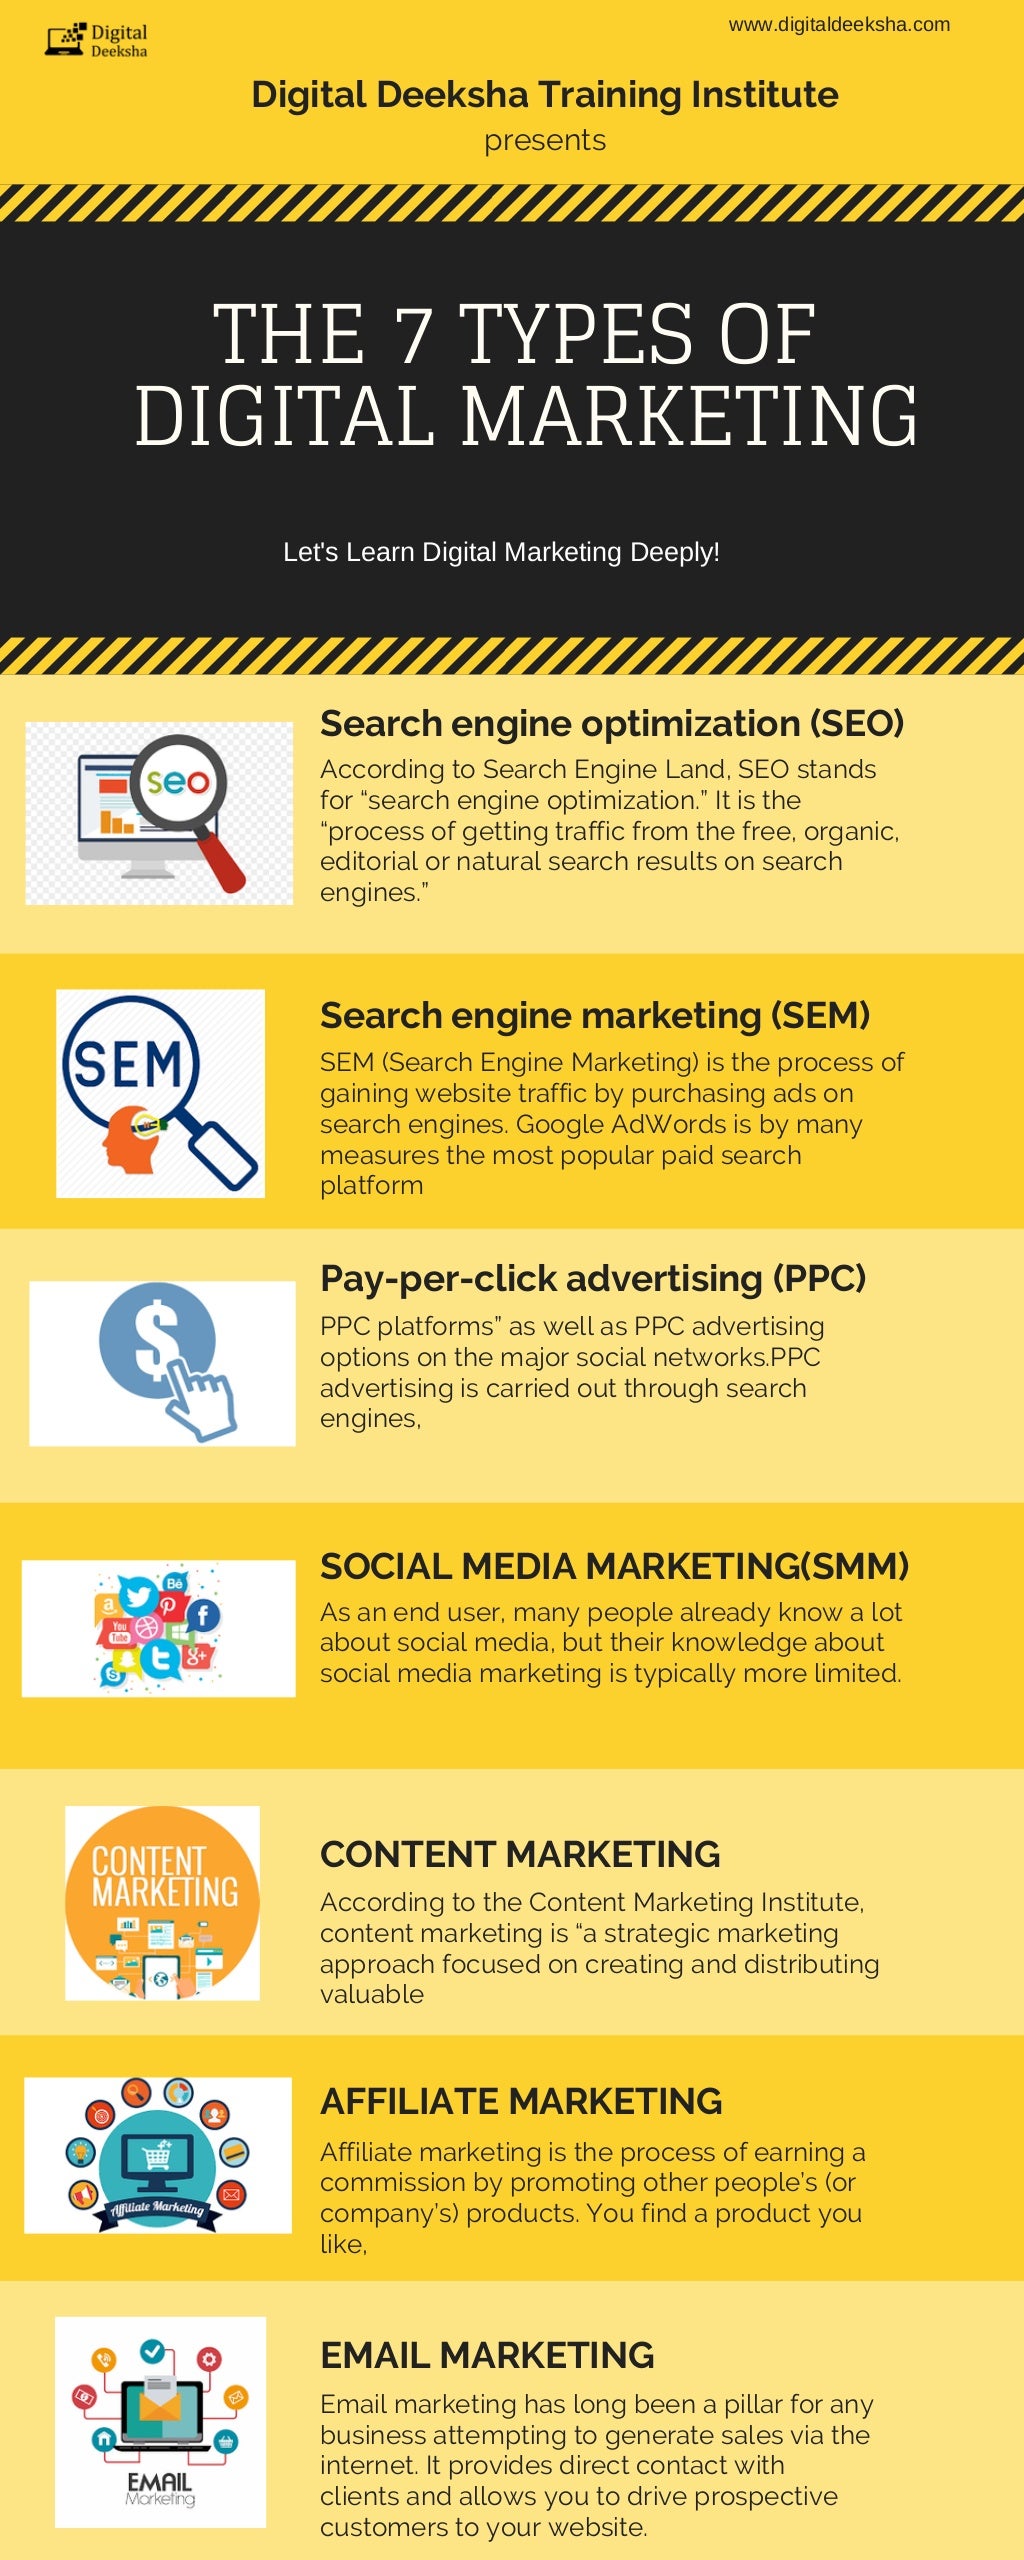 The 7 types of digital marketing